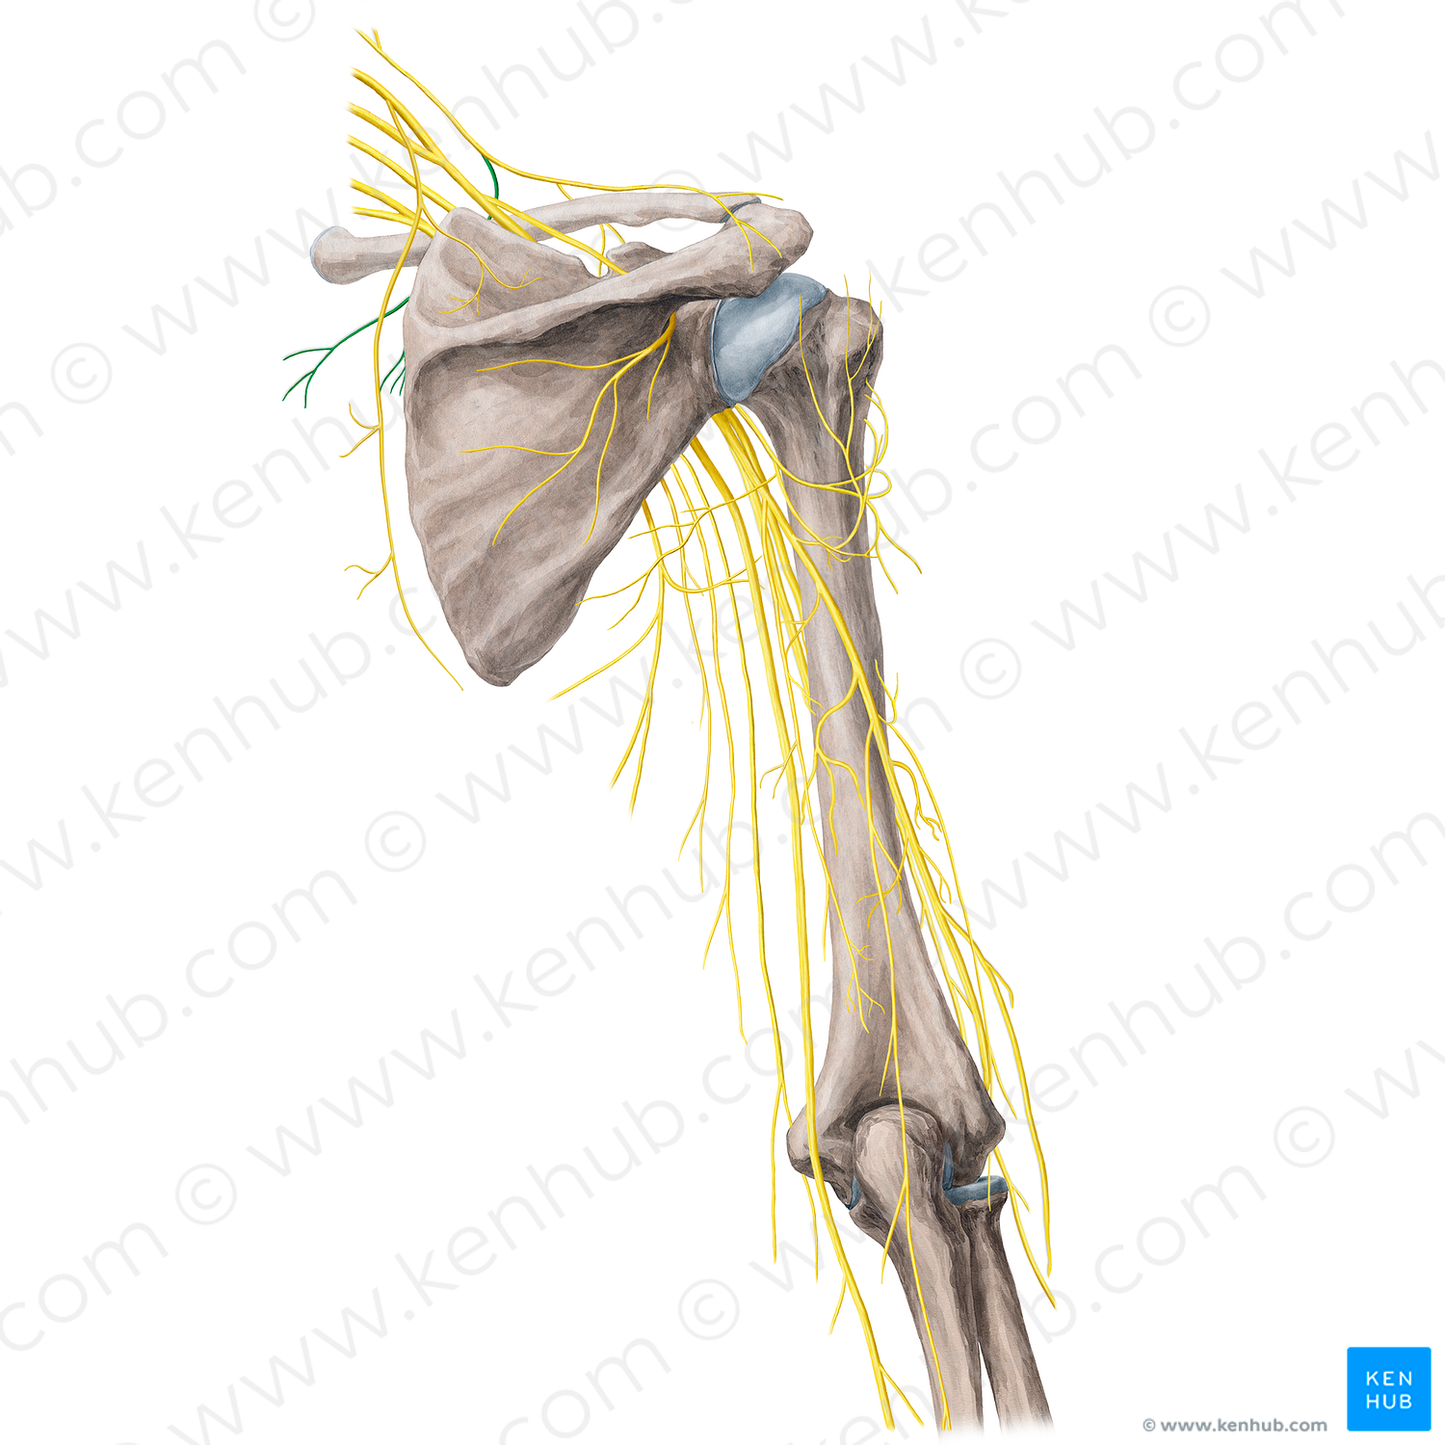 Medial supraclavicular nerves (#21768)